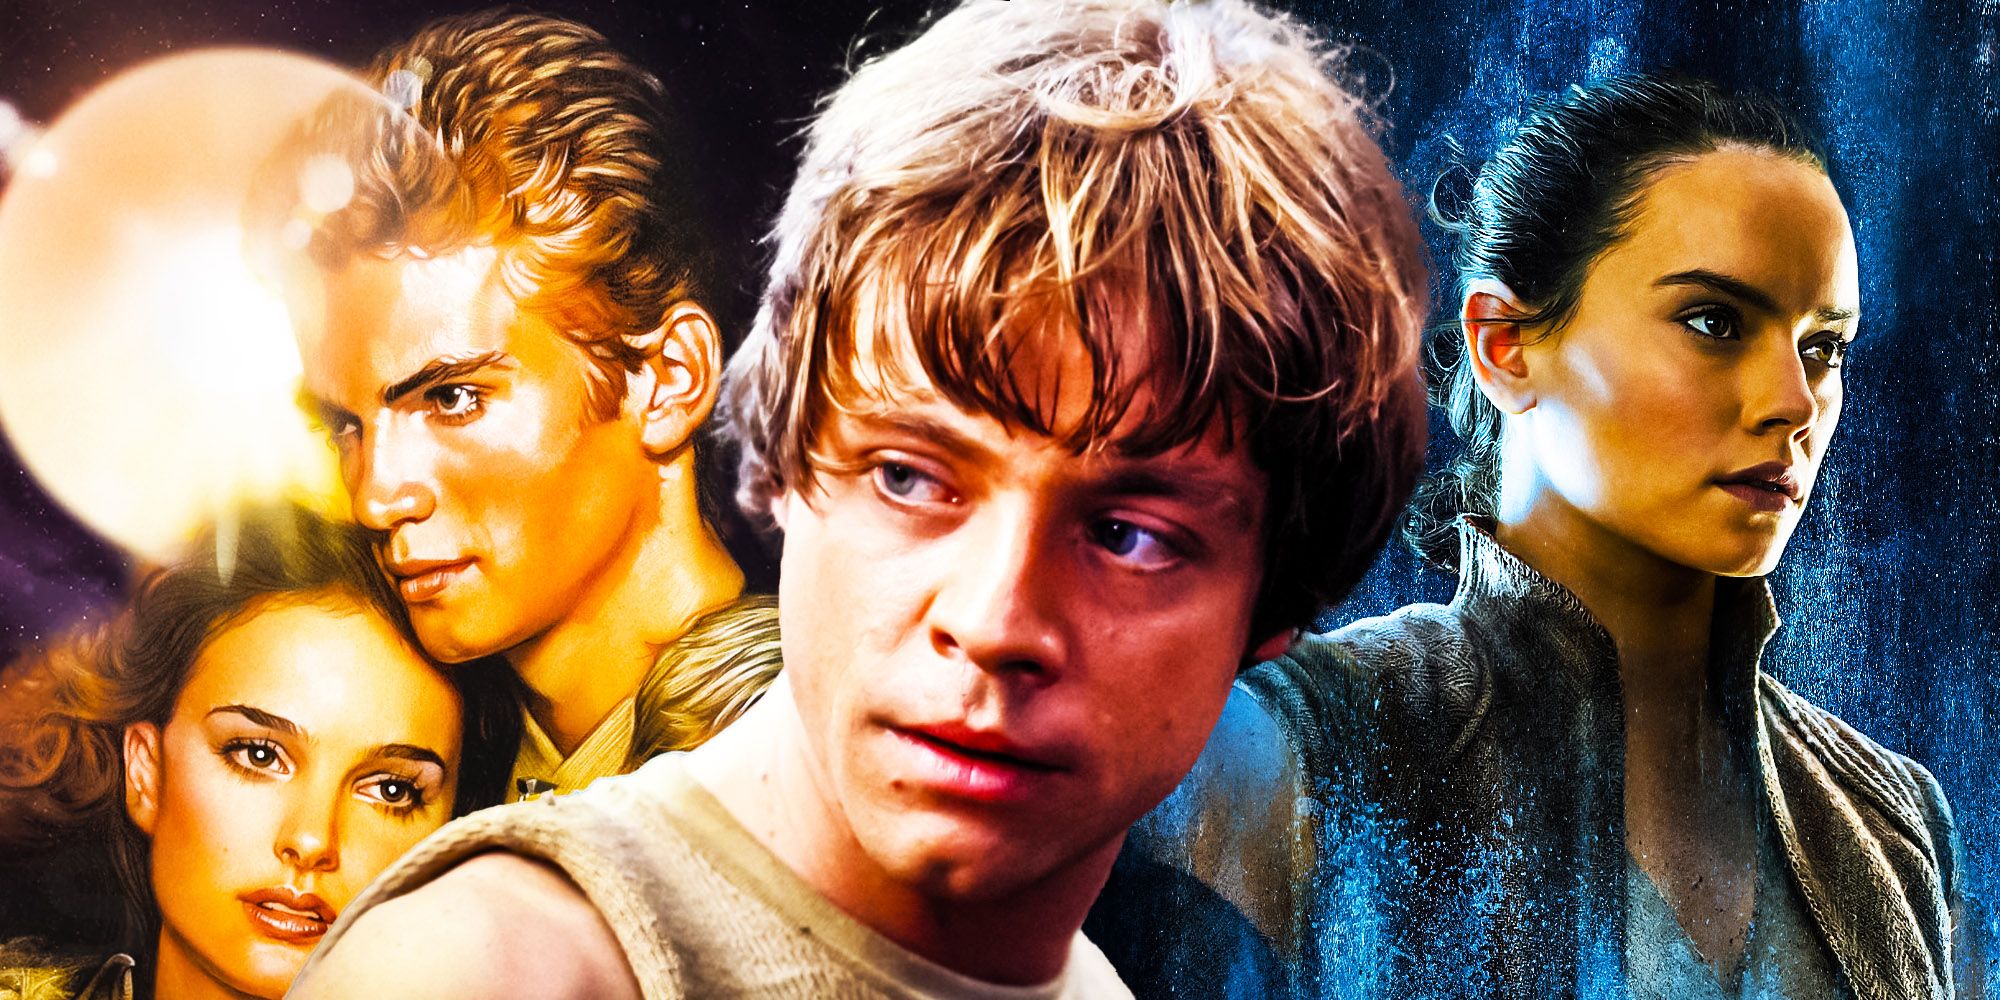 Amidala and Anakin from Star Wars Episode 1-3, Luke Skywalker in Star Wars Episodes 4-6, and Rey in Star Wars Episodes 7-9